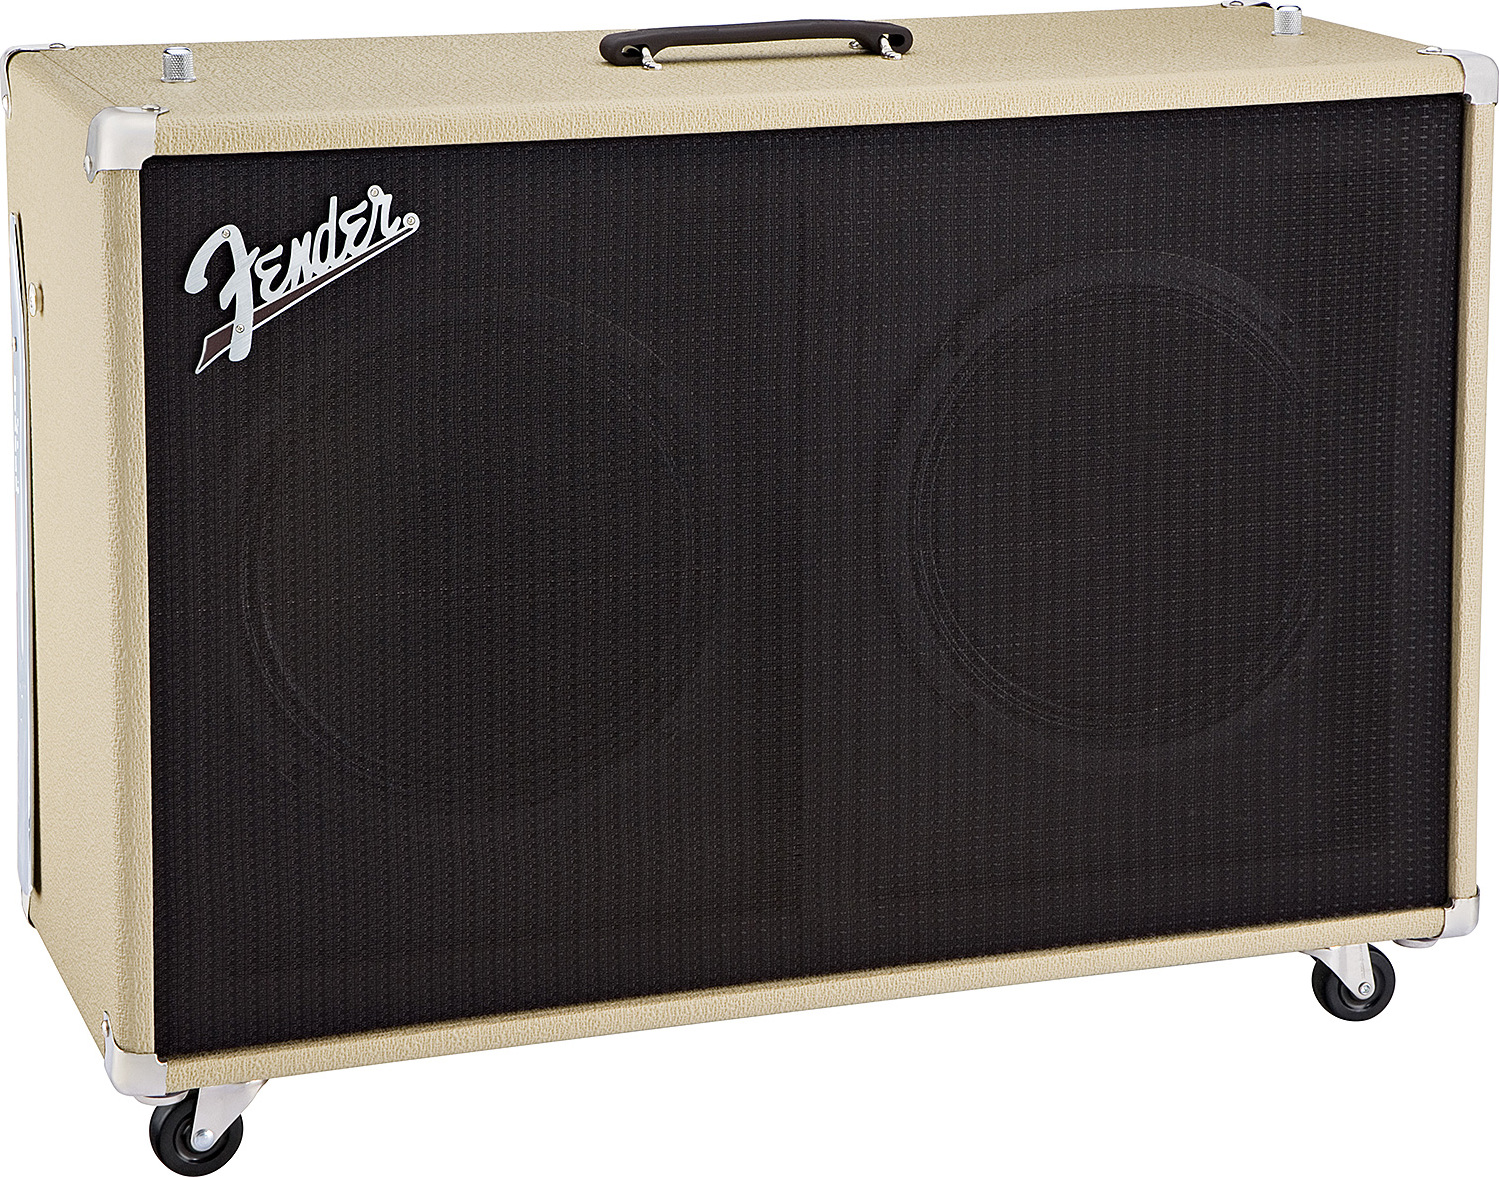 Fender Super Sonic 60 212 Enclosure 2x12 120w Blonde - Electric guitar amp cabinet - Main picture